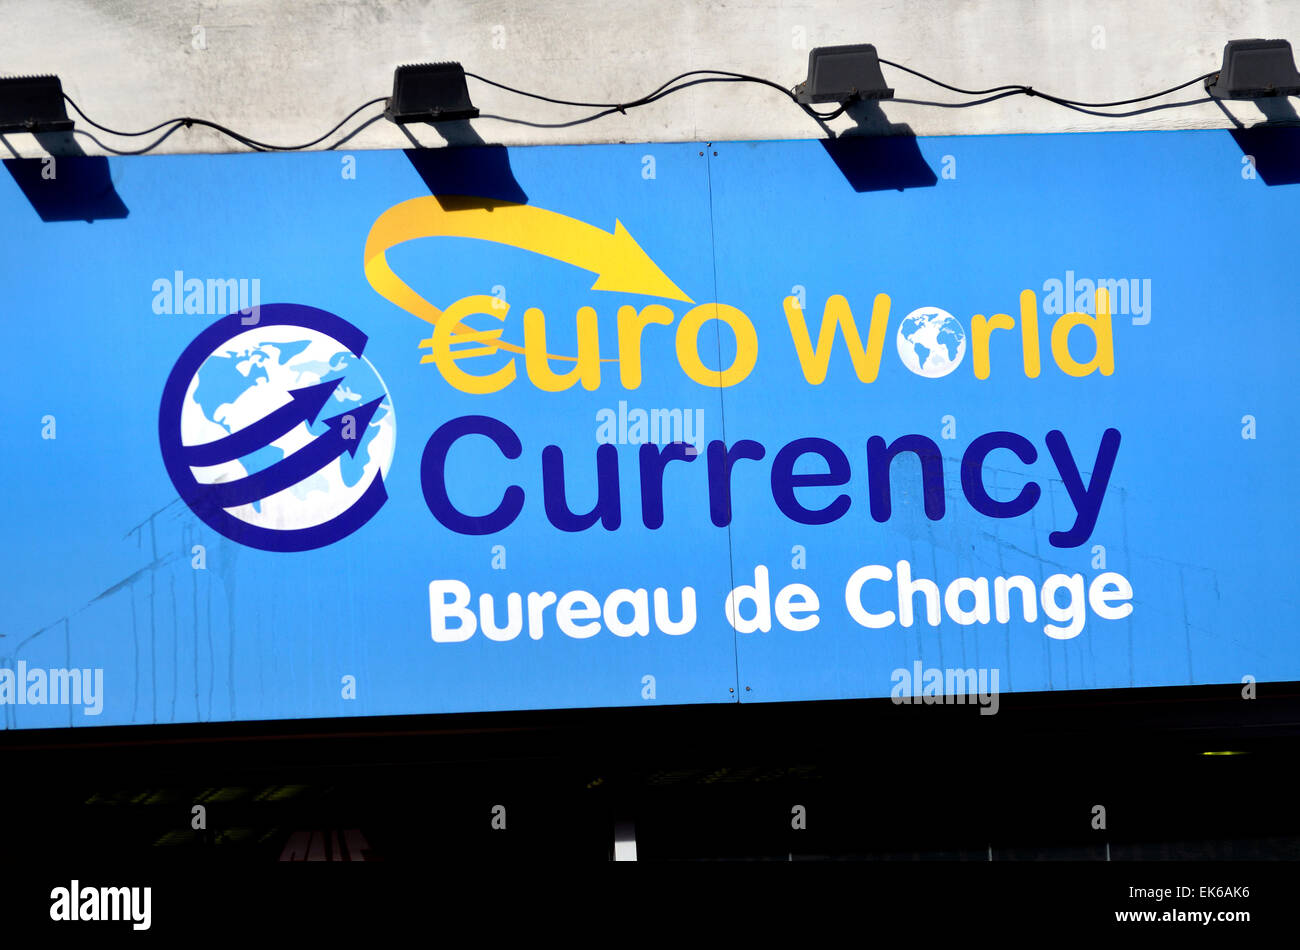 London, England, UK. Euroworld Currency Bureau de Change Stock Photo